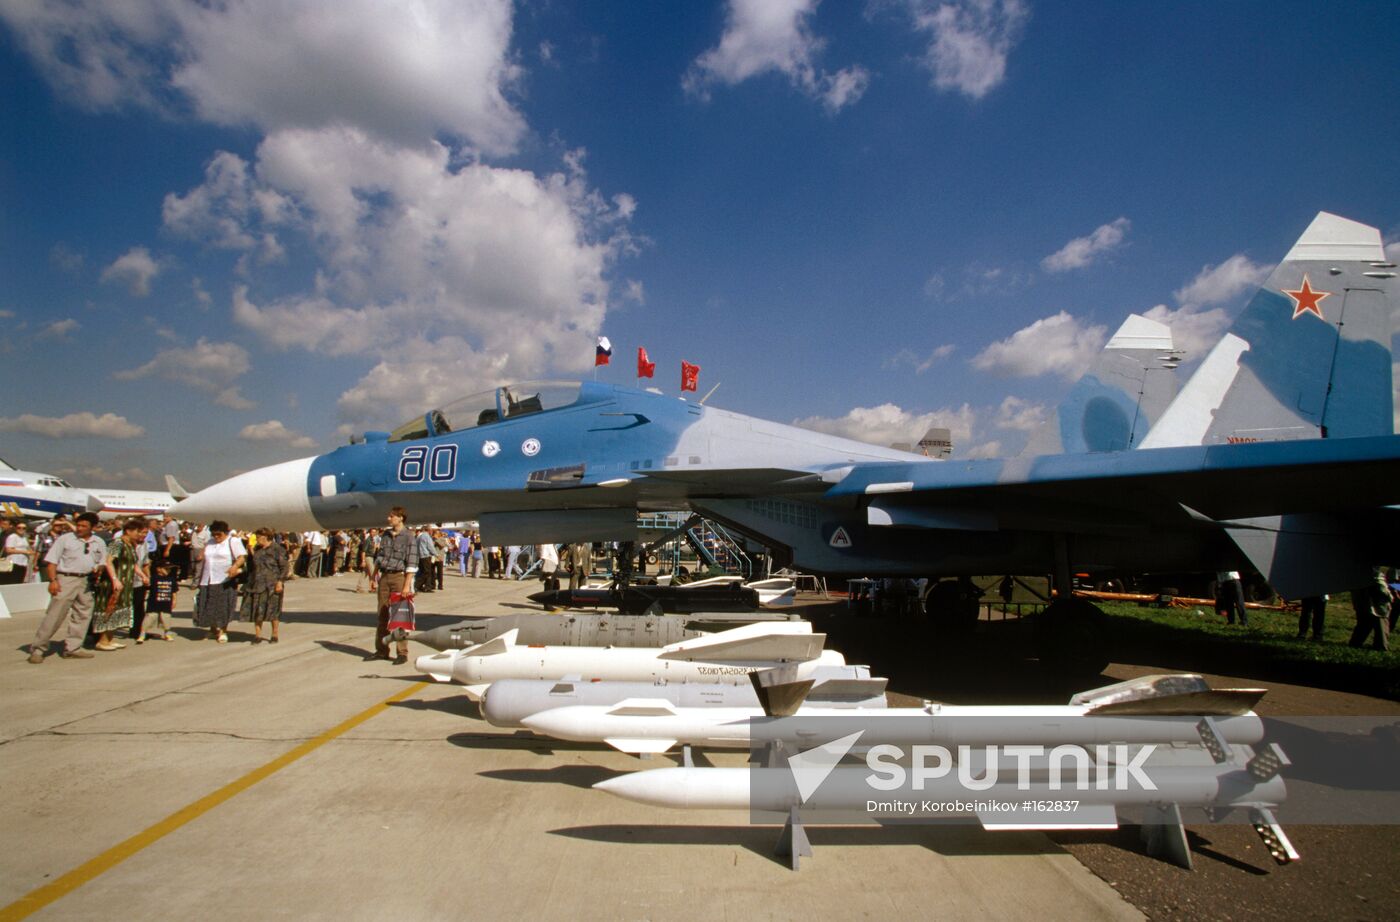 SU-20 MK FIGHTER AIR SHOW MAKS-2001